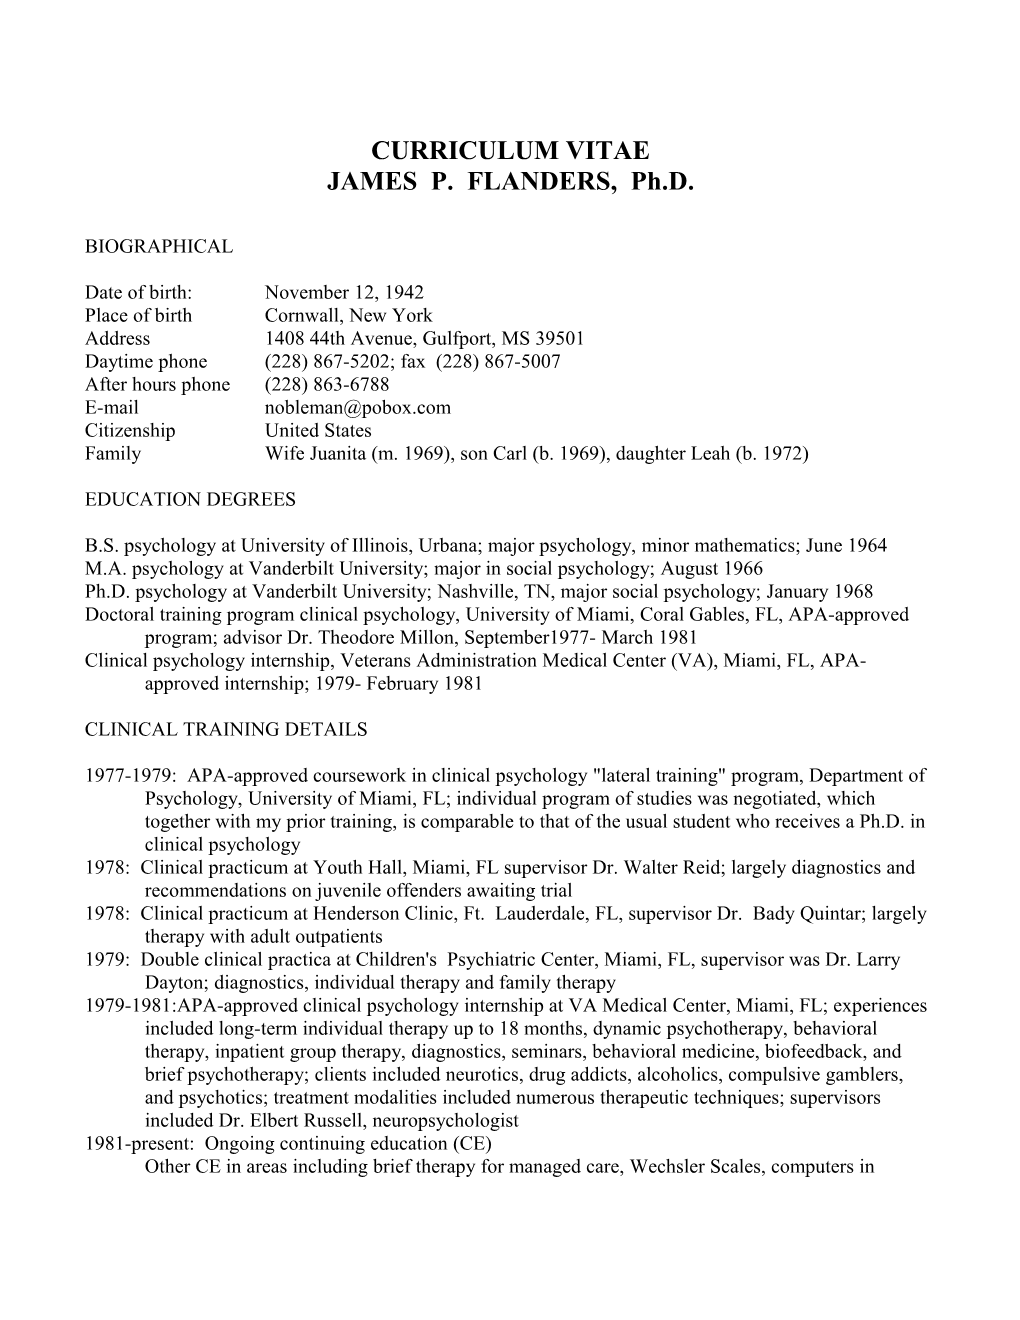 VITAE JAMES P. FLANDERS, Ph.D. PAGE -1